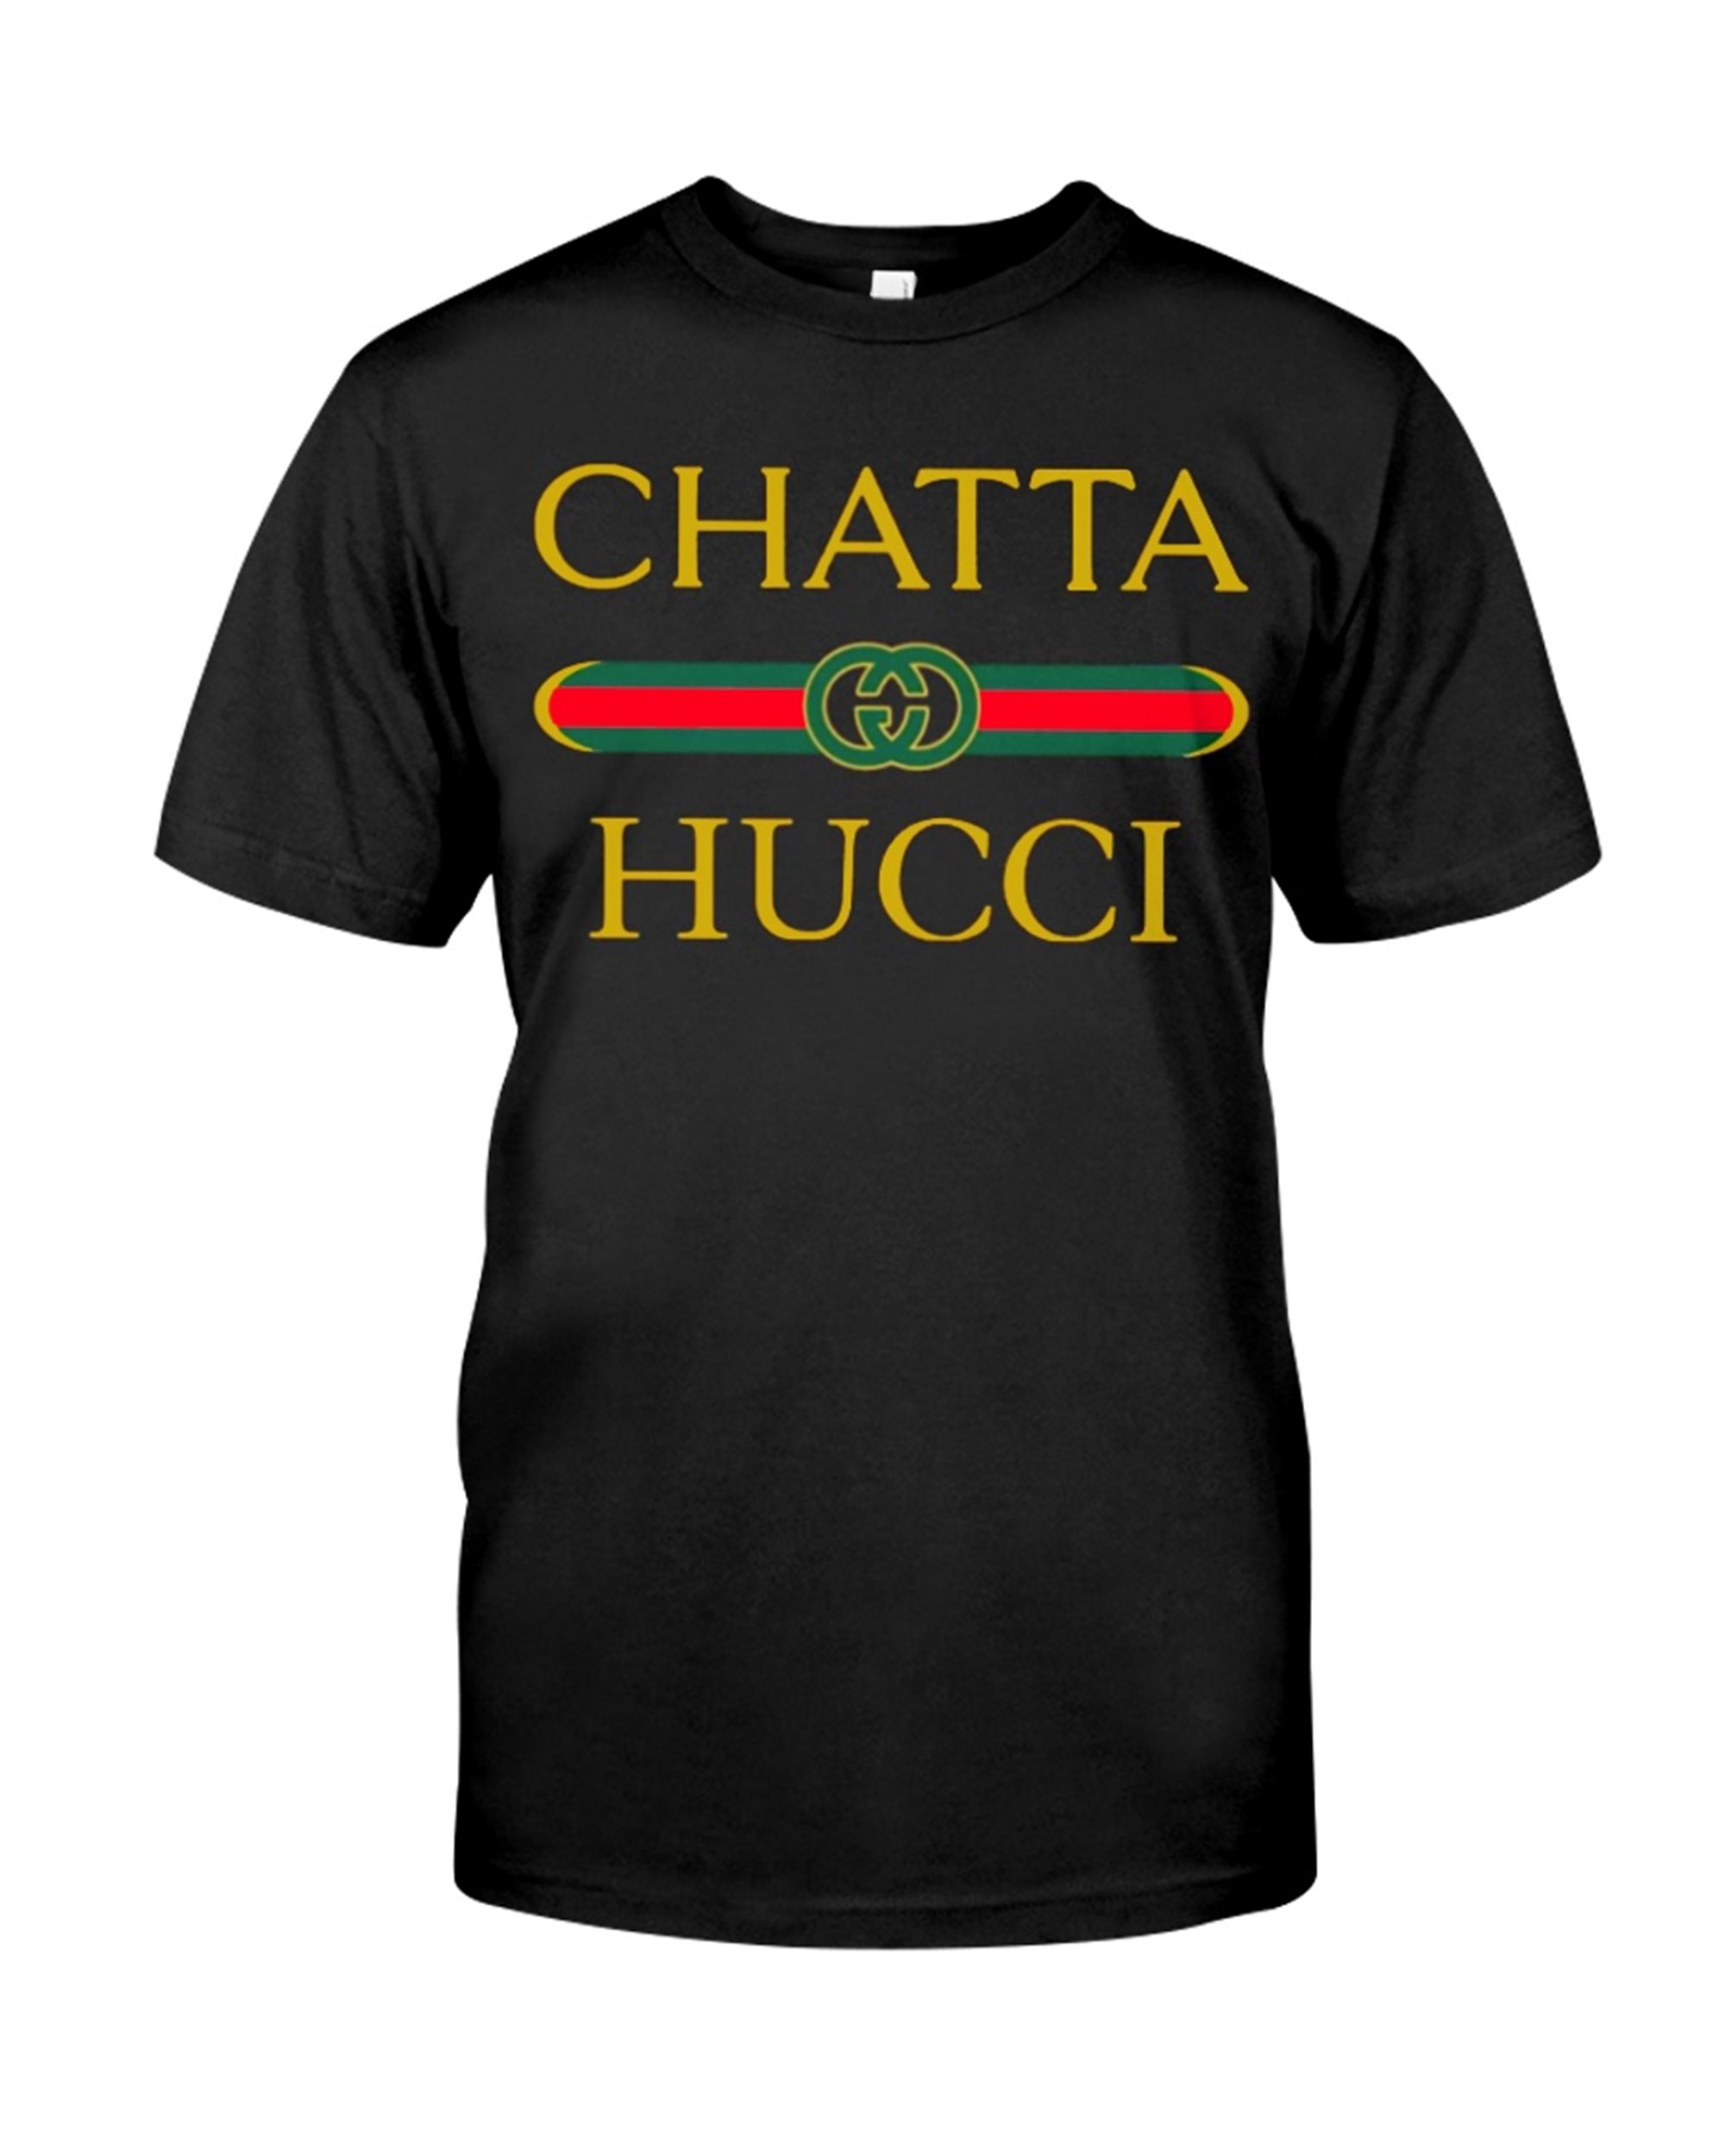 Chatta Hucci Gucci Shirt Tshirt For Women White